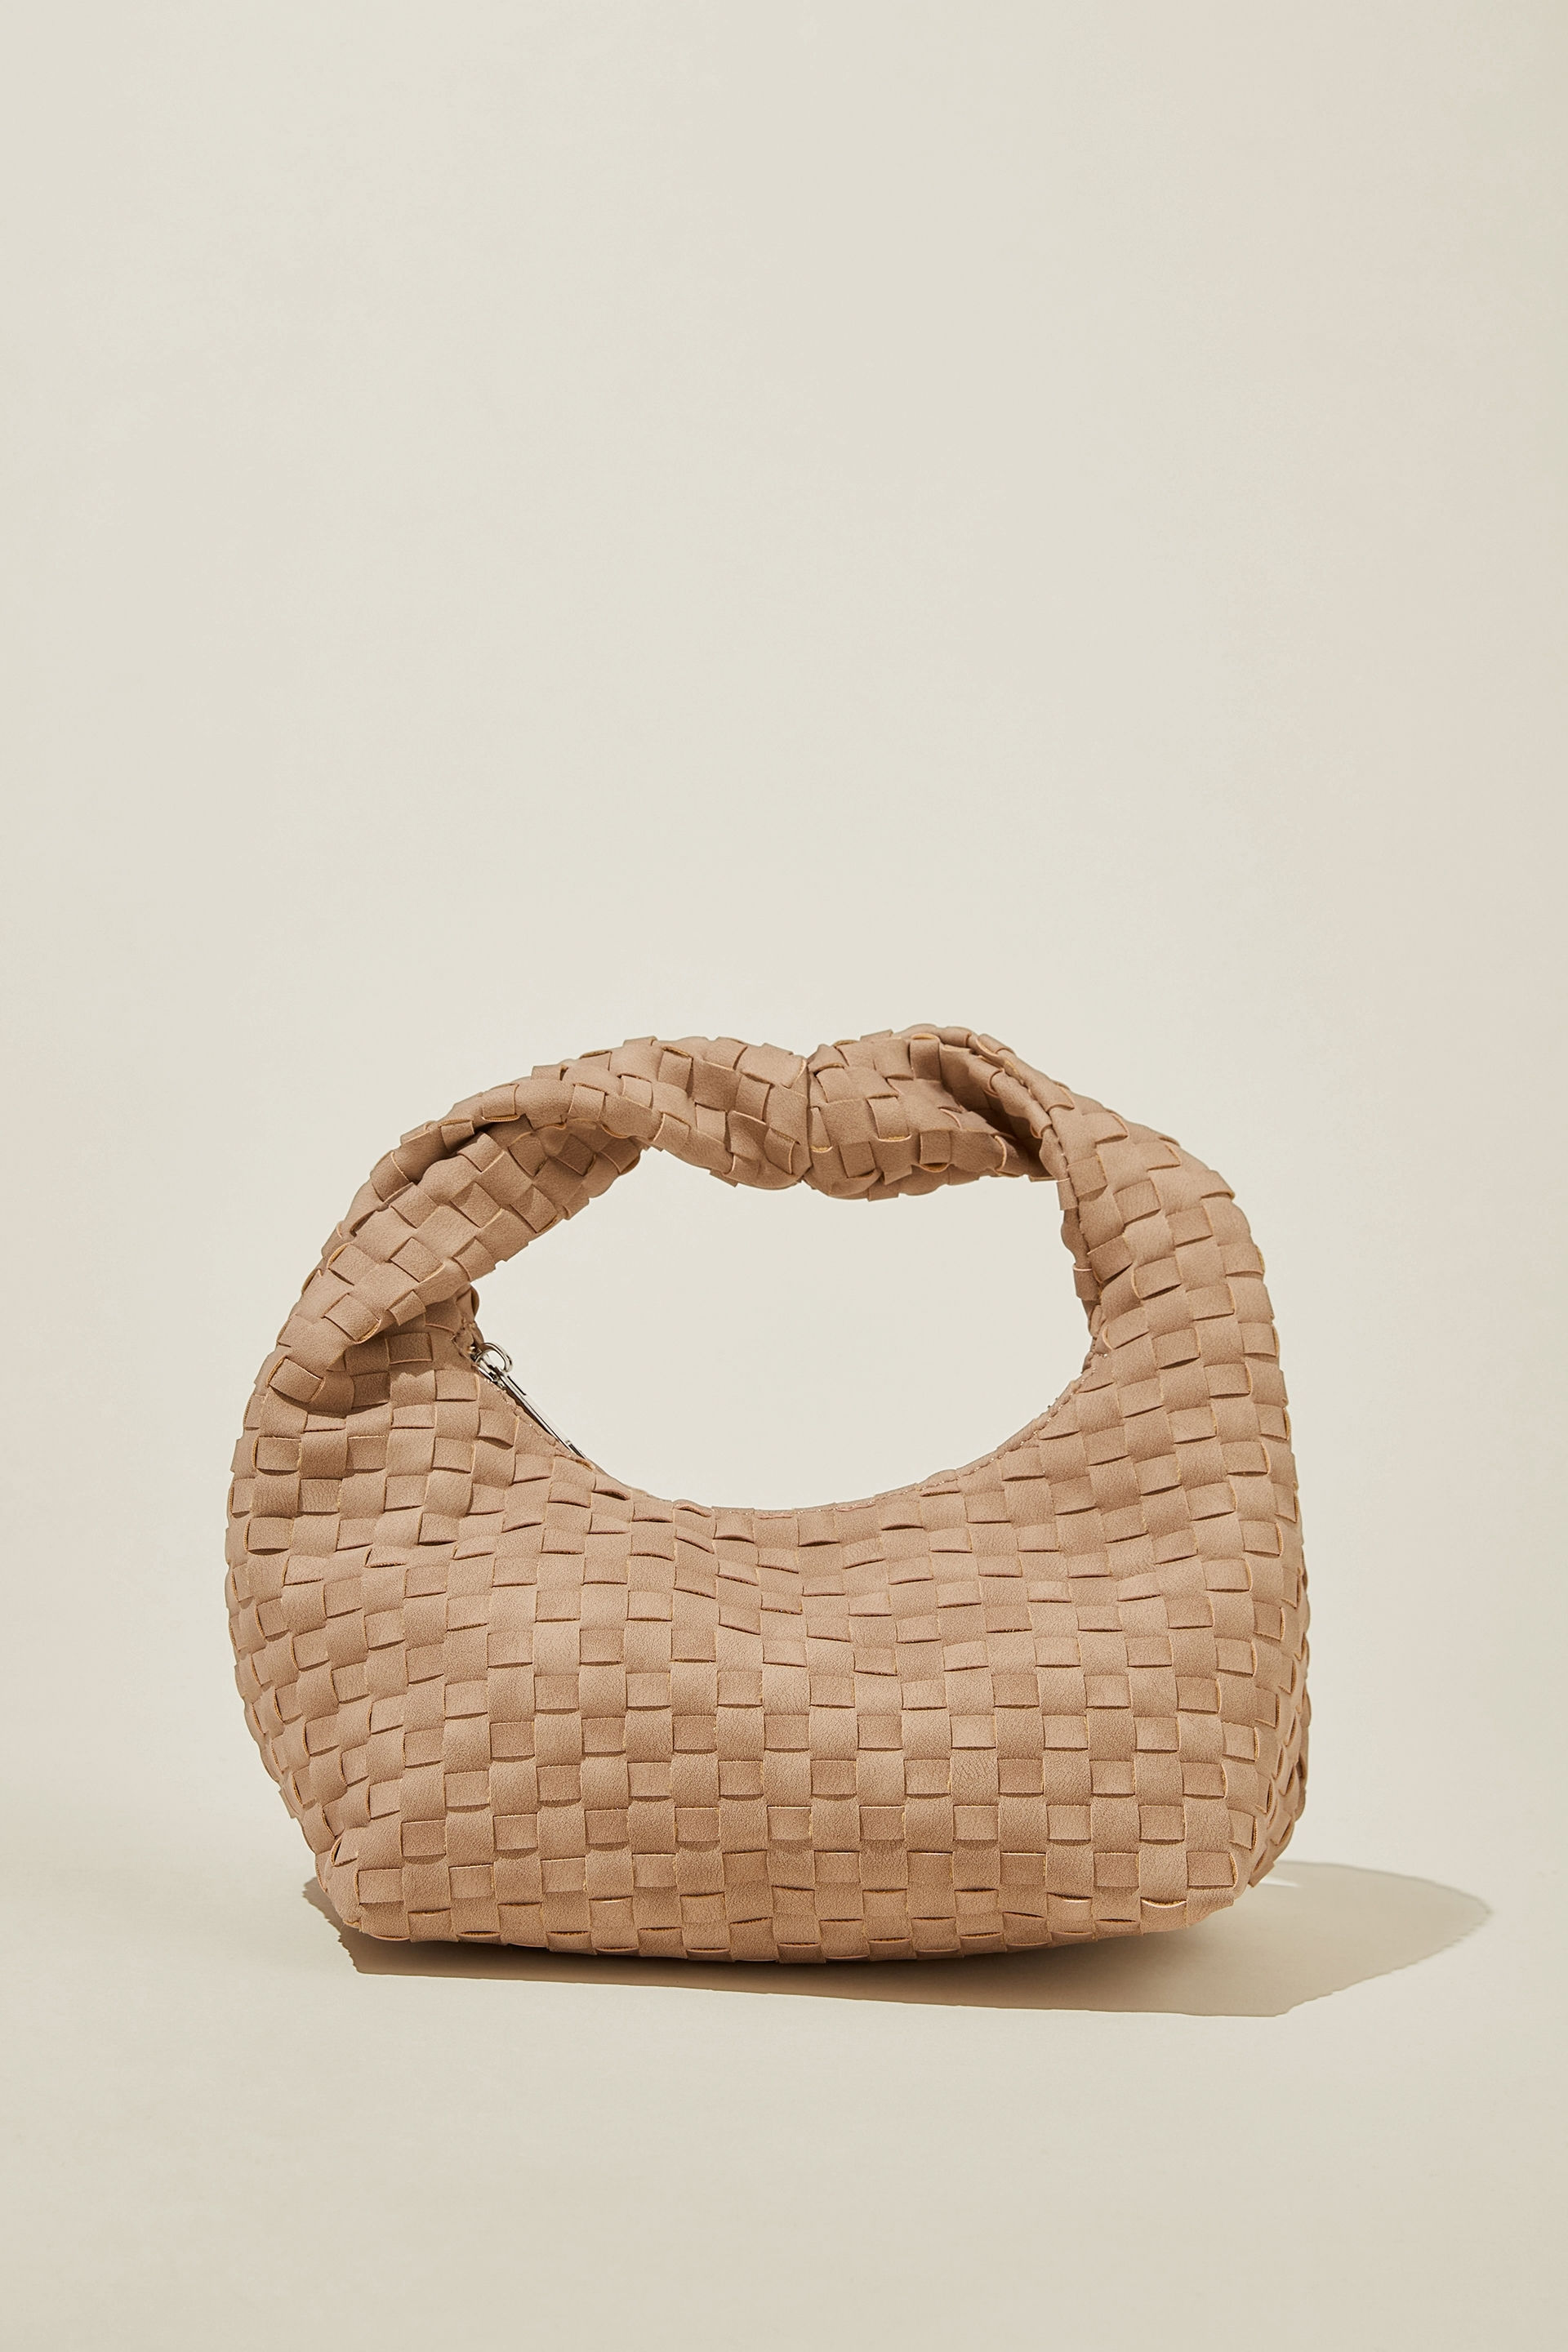 Rubi - Goldie Mini Handle Bag - Light tan nubuck woven